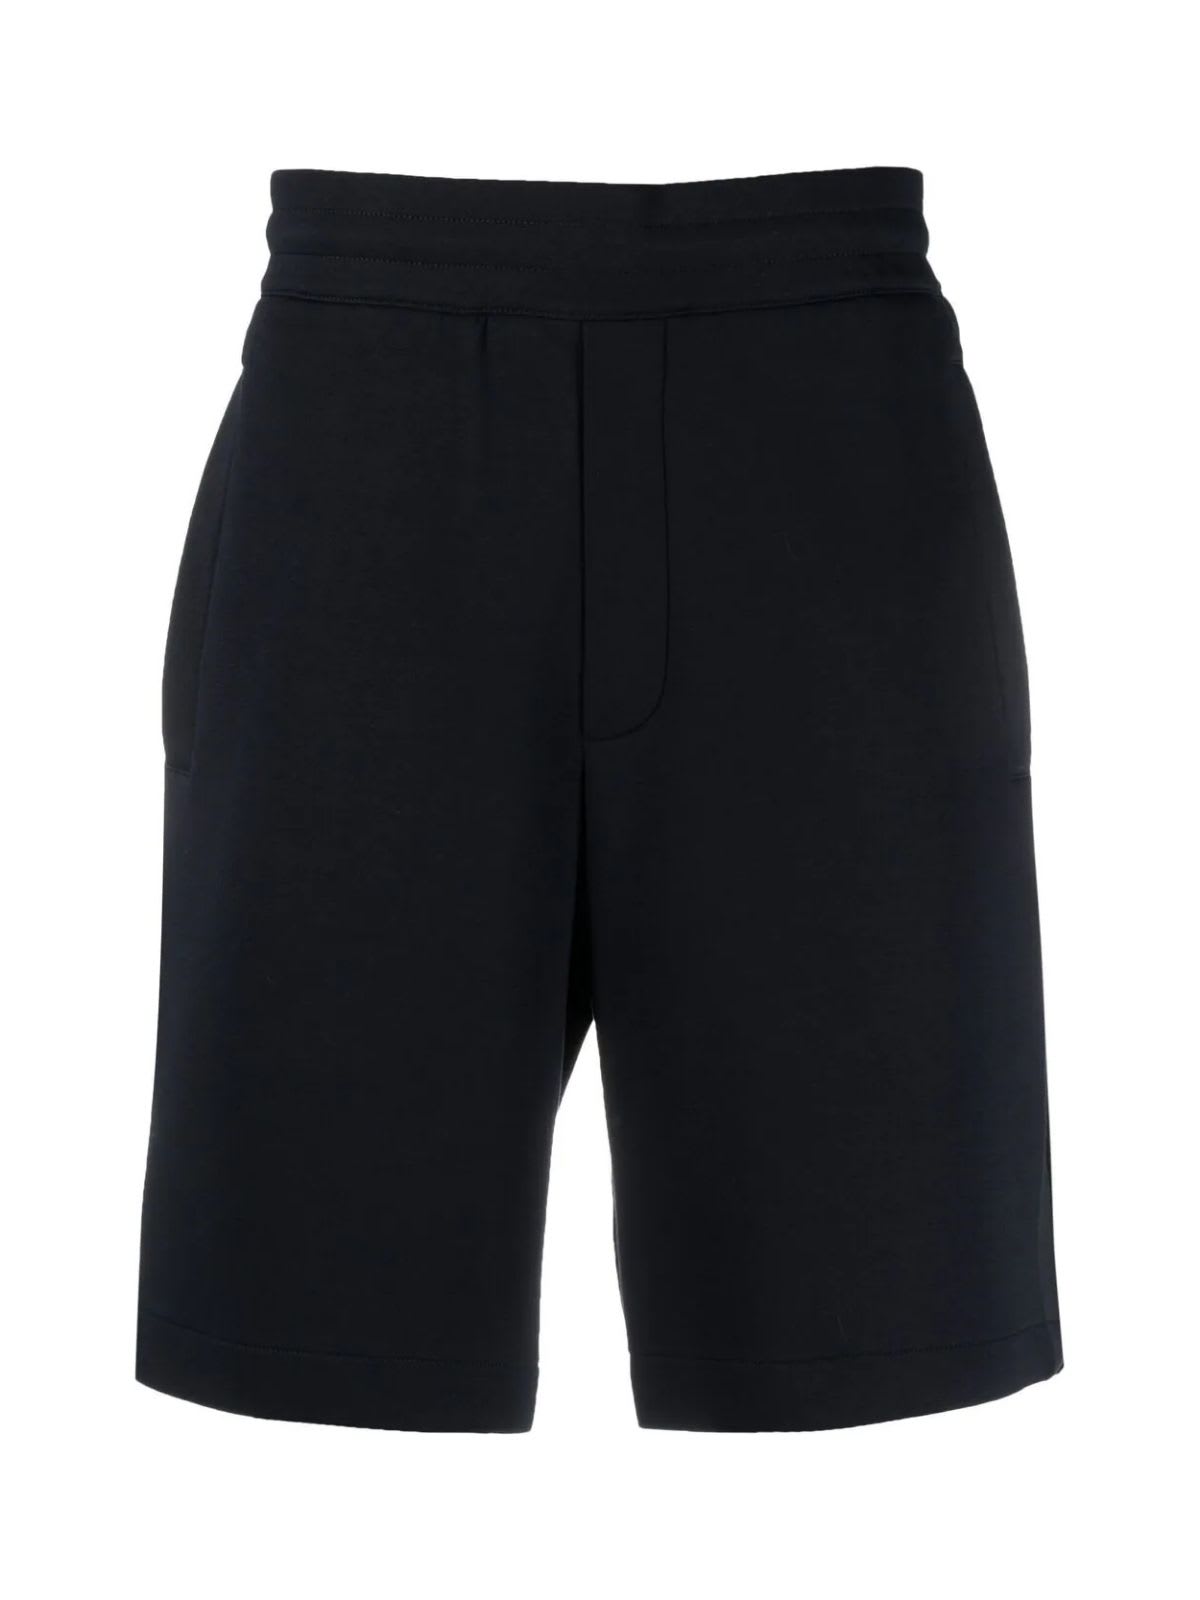 Emporio Armani Plain Shorts